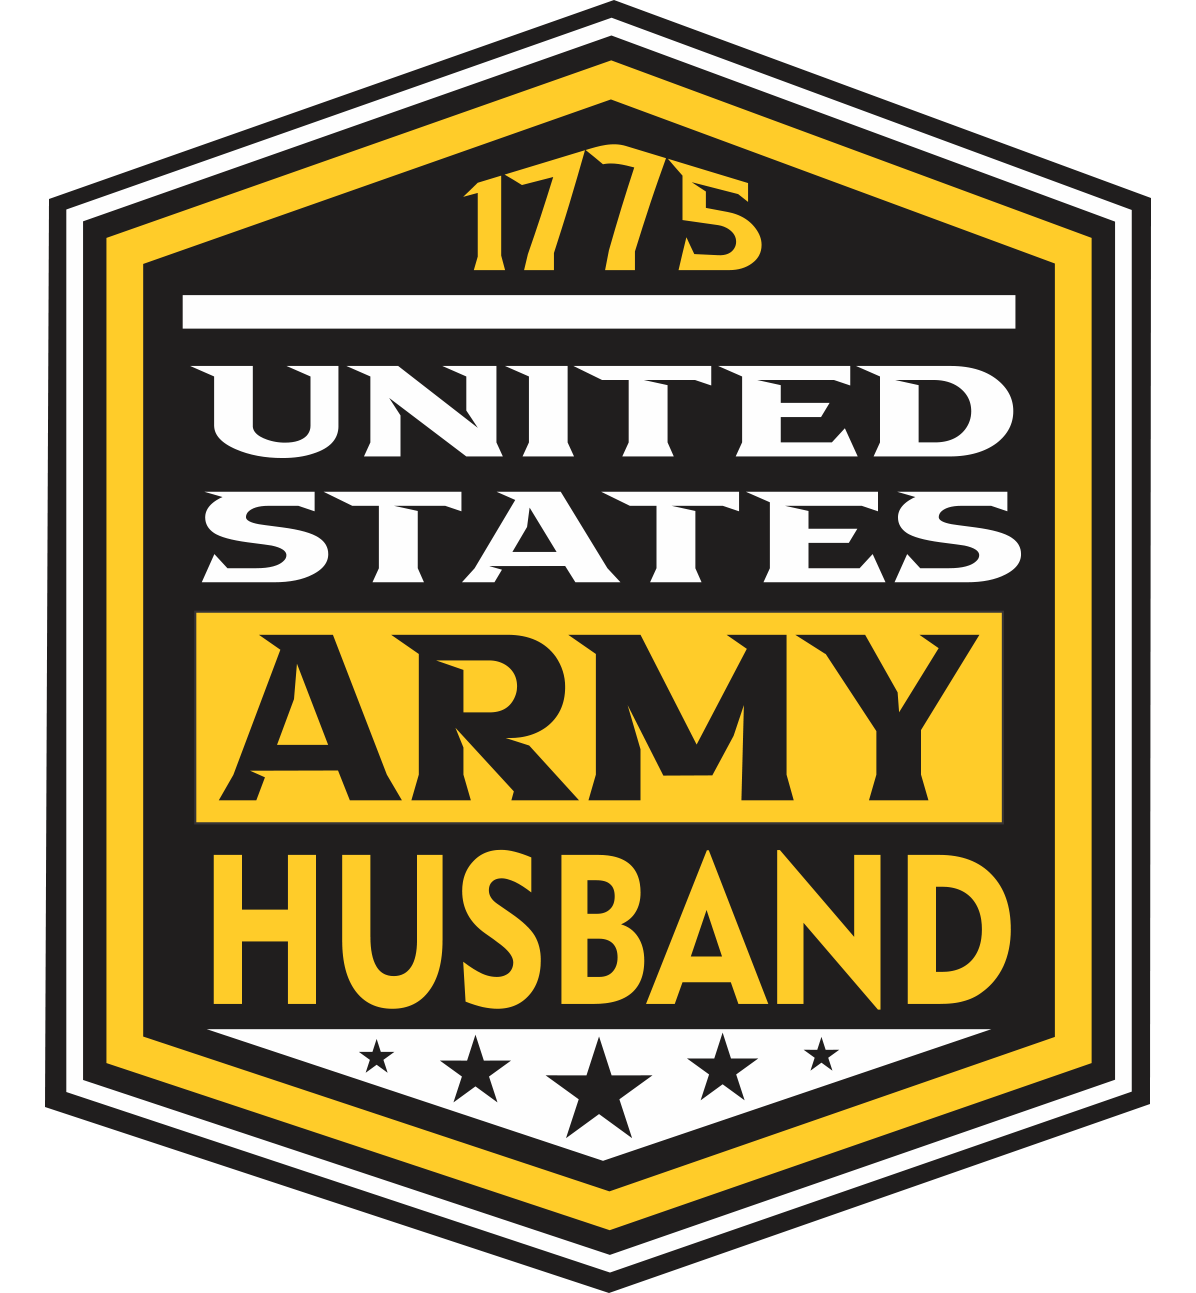 United States Army Husband 1775 Sticker